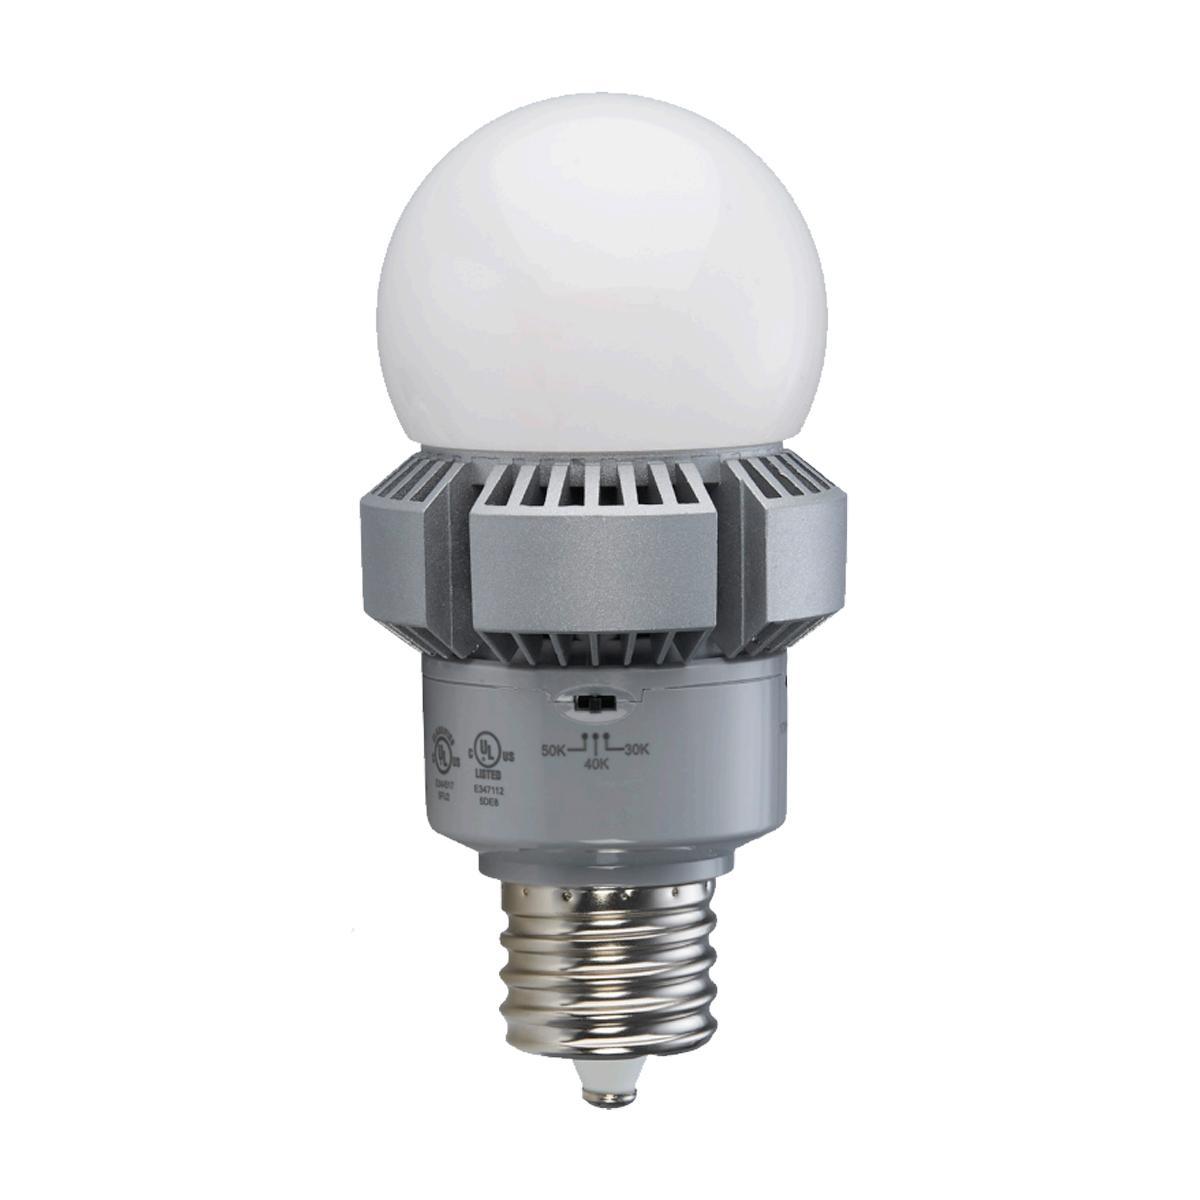 A23 LED Bulb, 32 Watt, 4725 Lumens, 30K/40K/50K, EX39 Mogul Extended Base, Frosted Finish